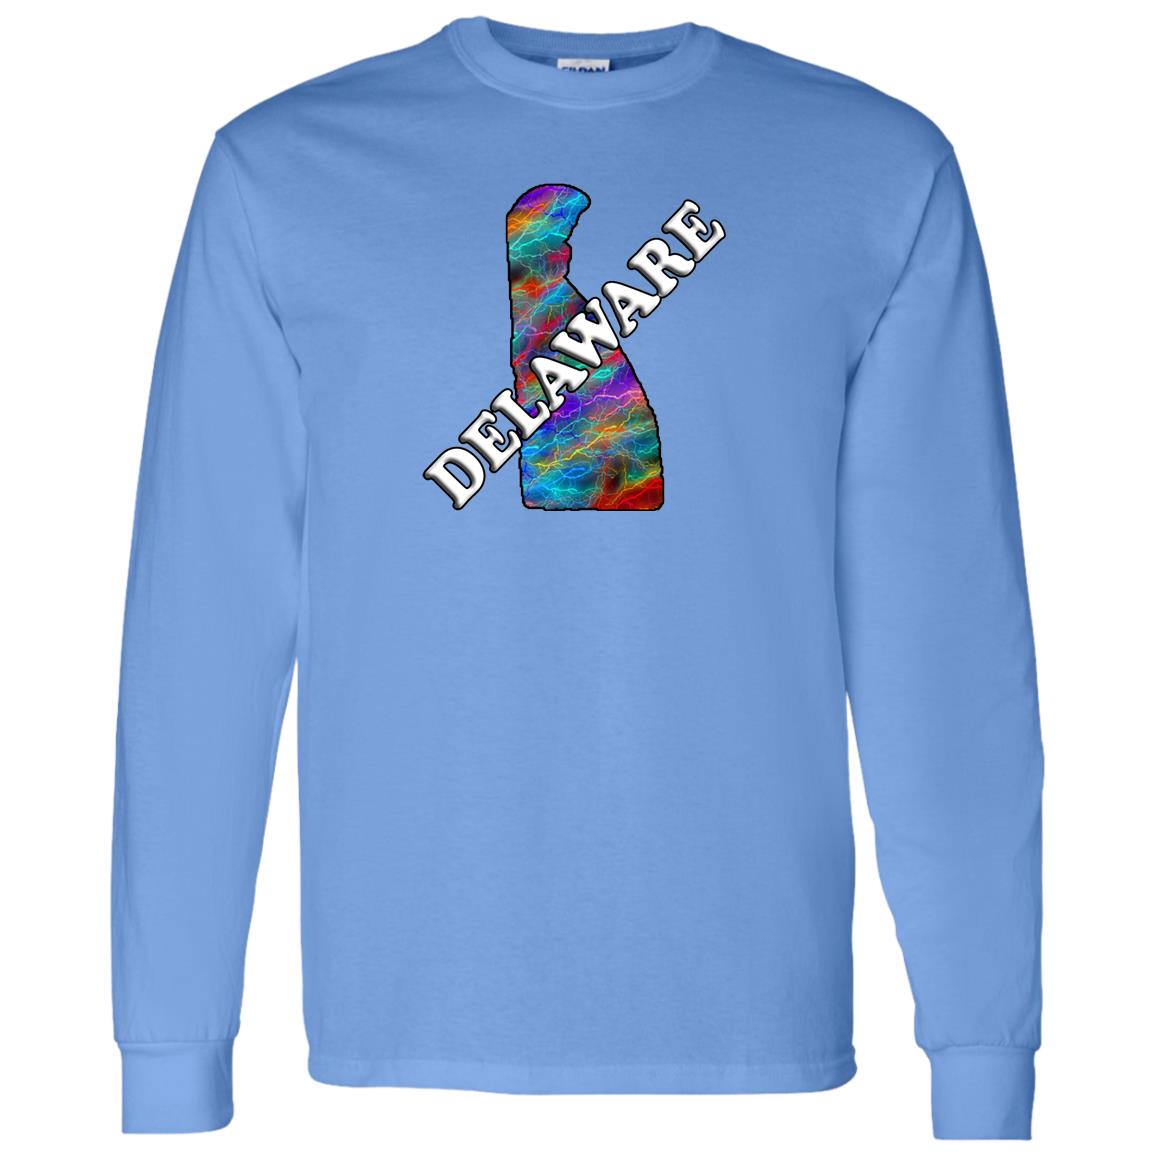 Delaware Long Sleeve State T-Shirt